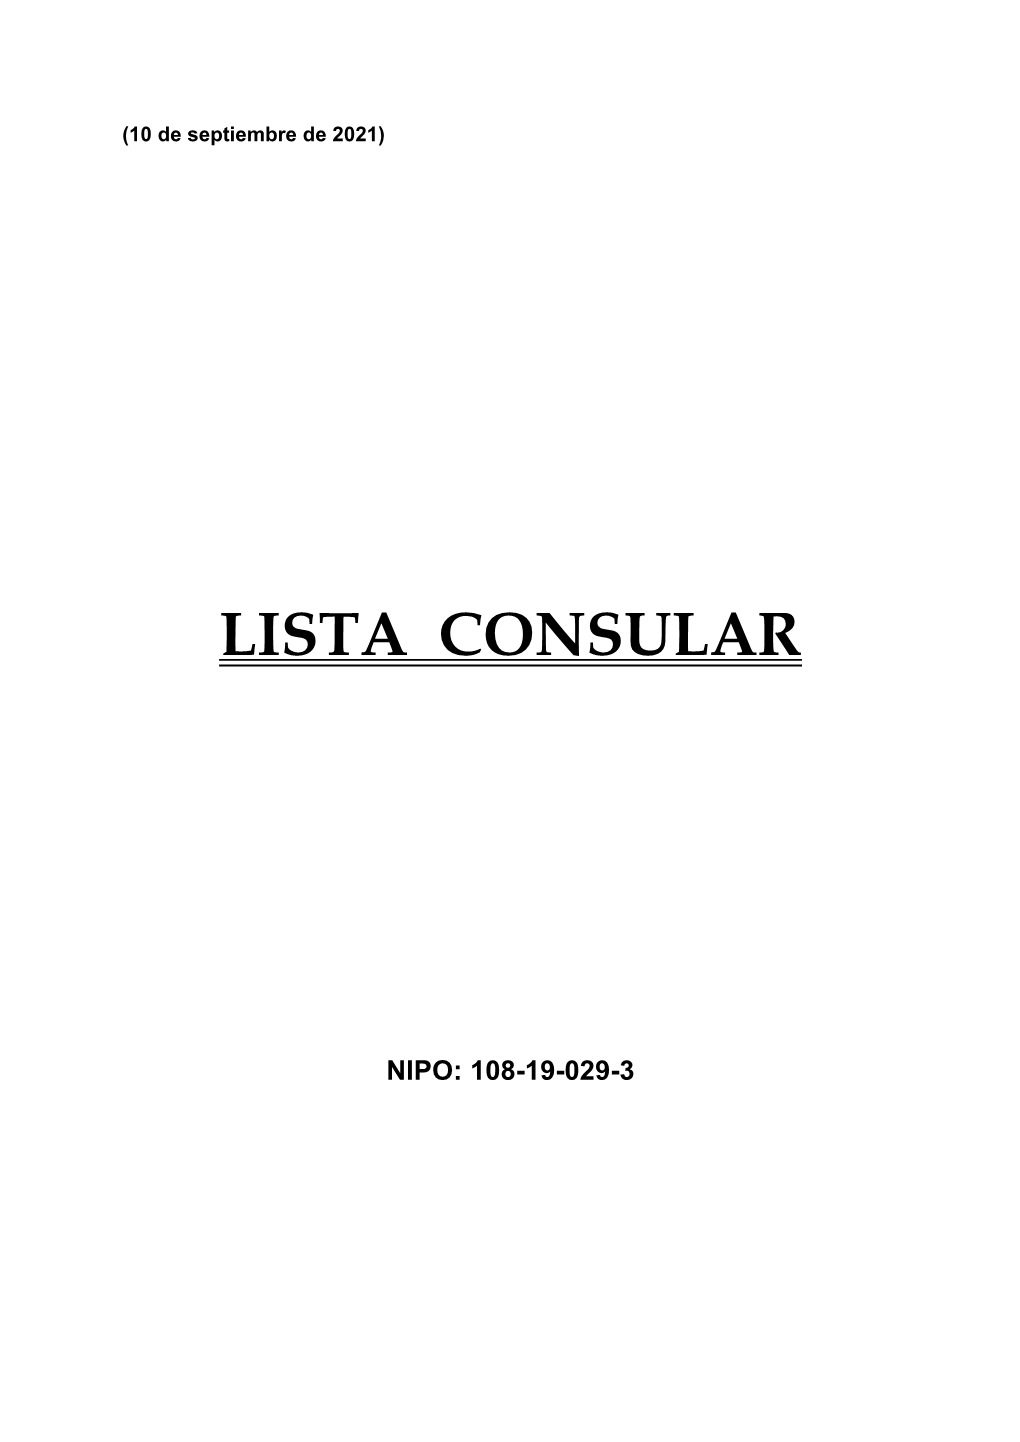 Lista Consular